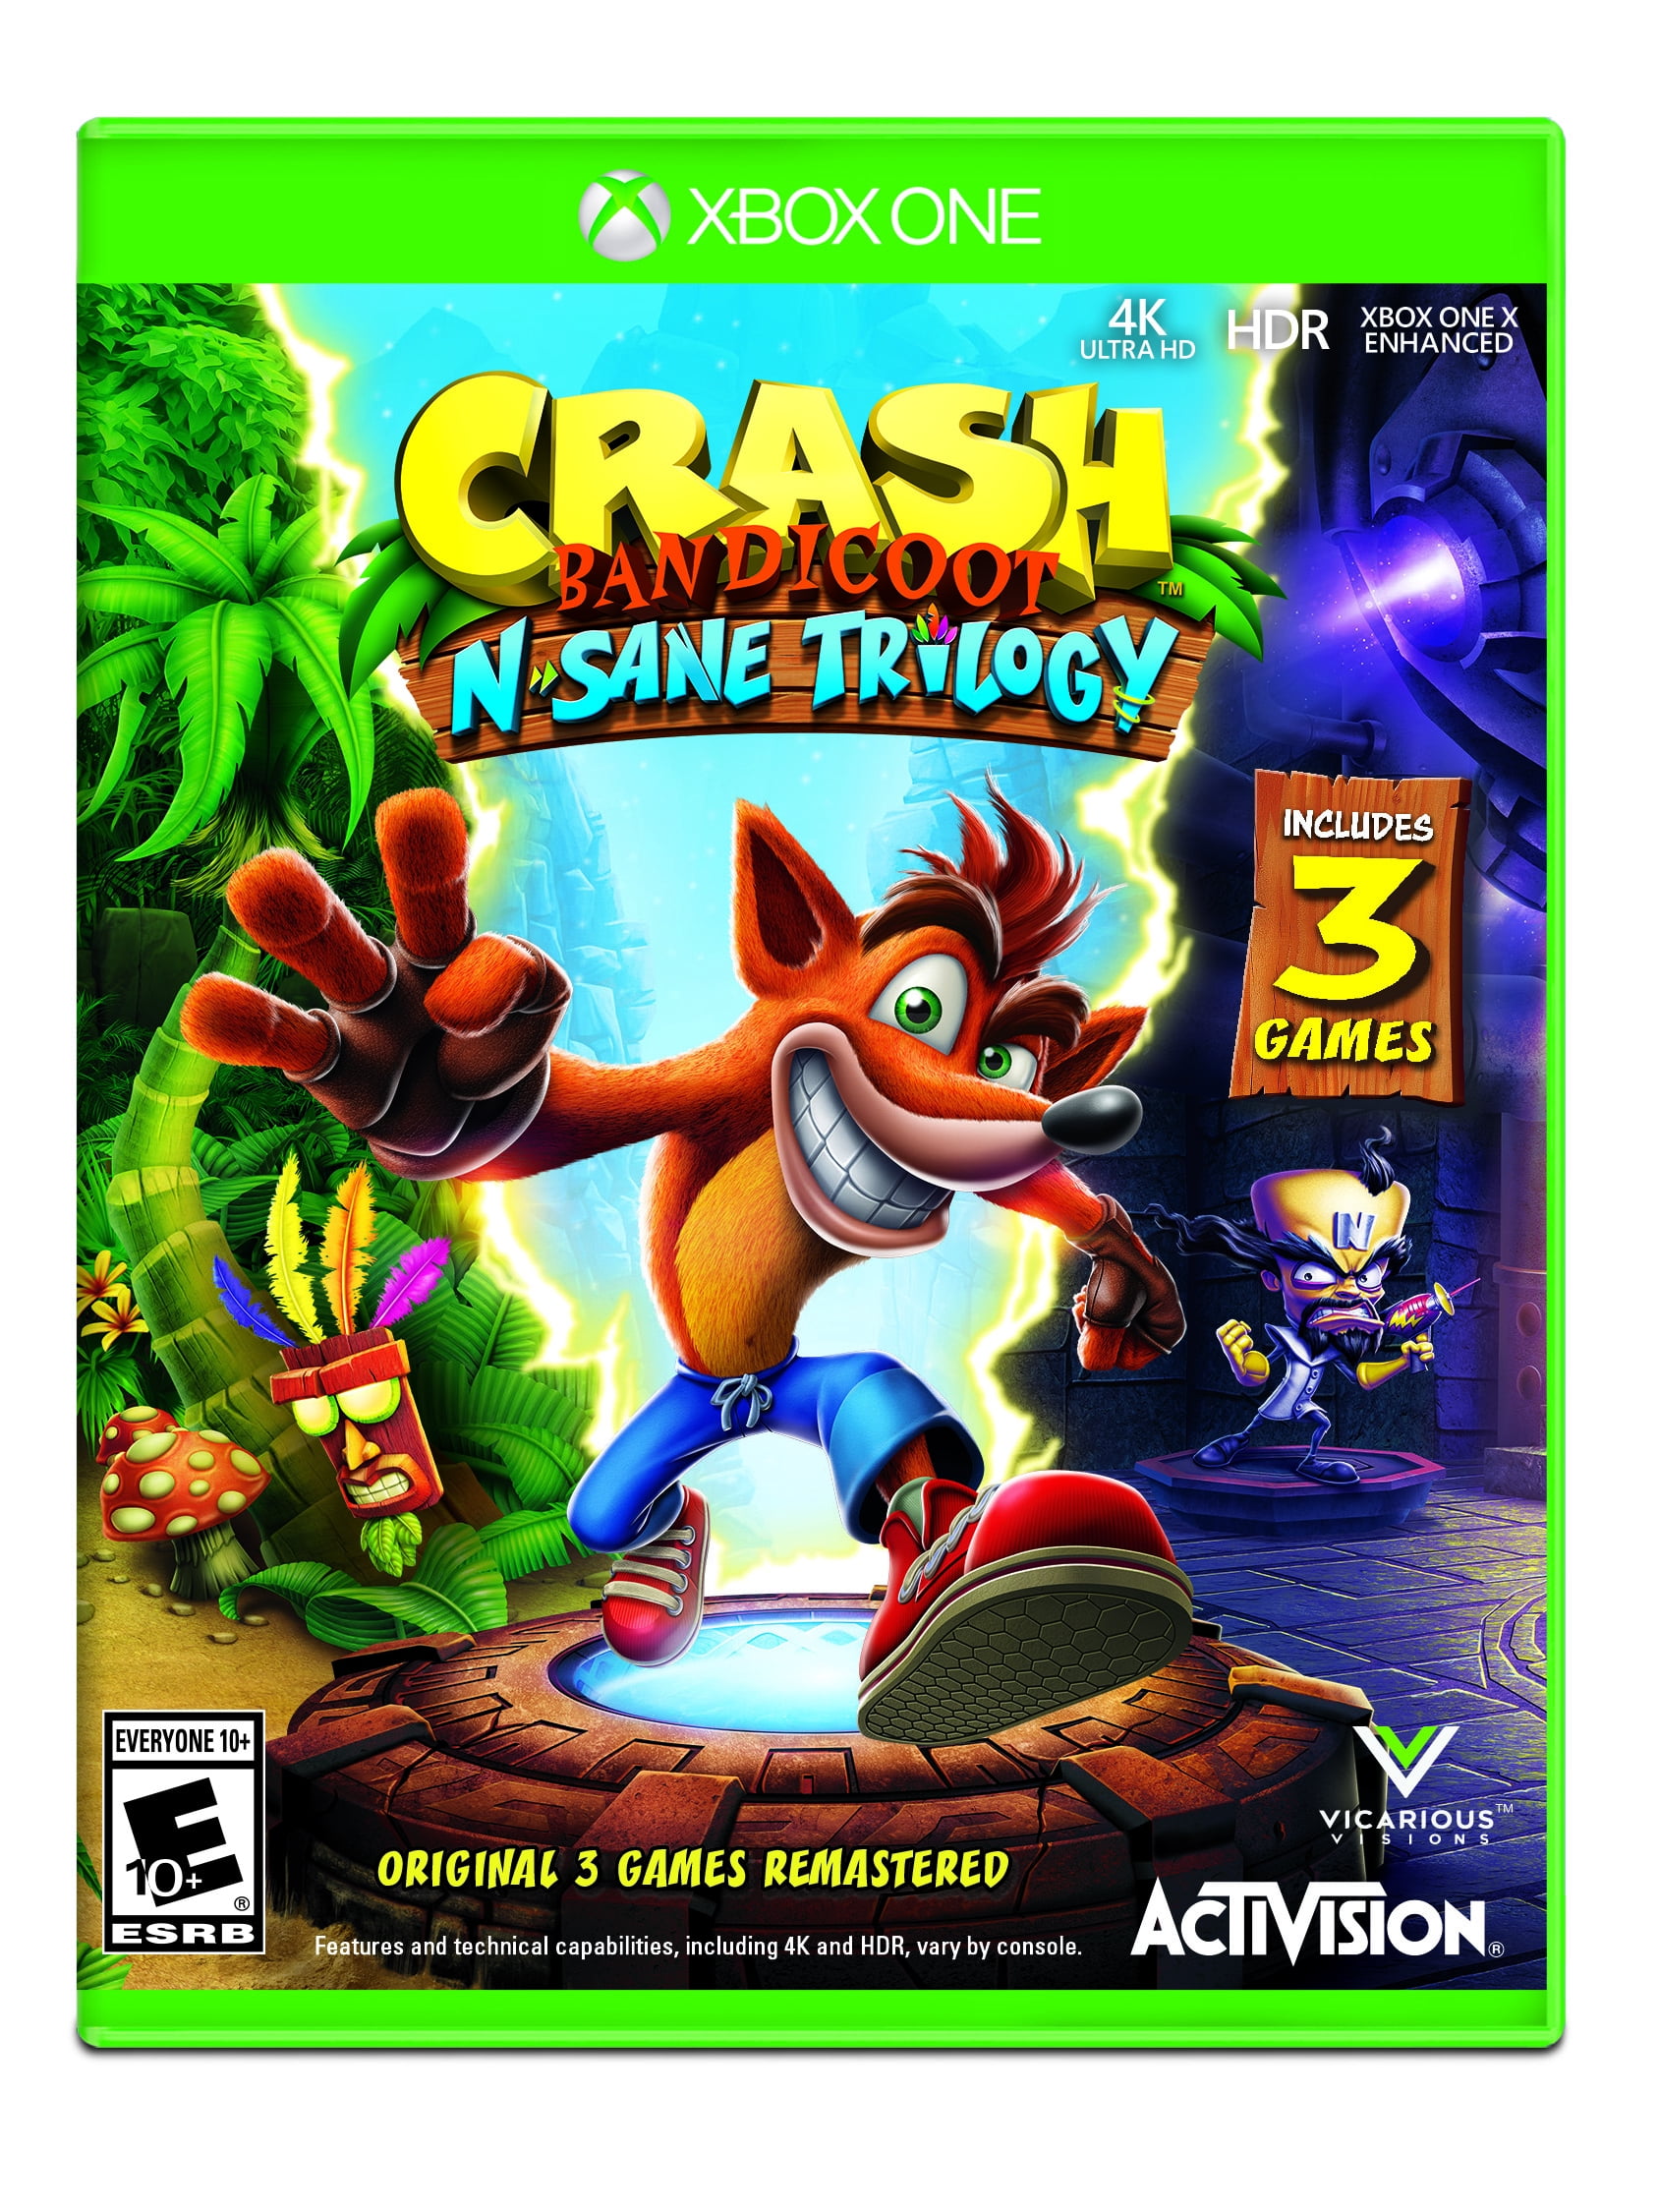 Crash Bandicoot N. Sane Trilogy Activision PlayStation 4 047875882225 